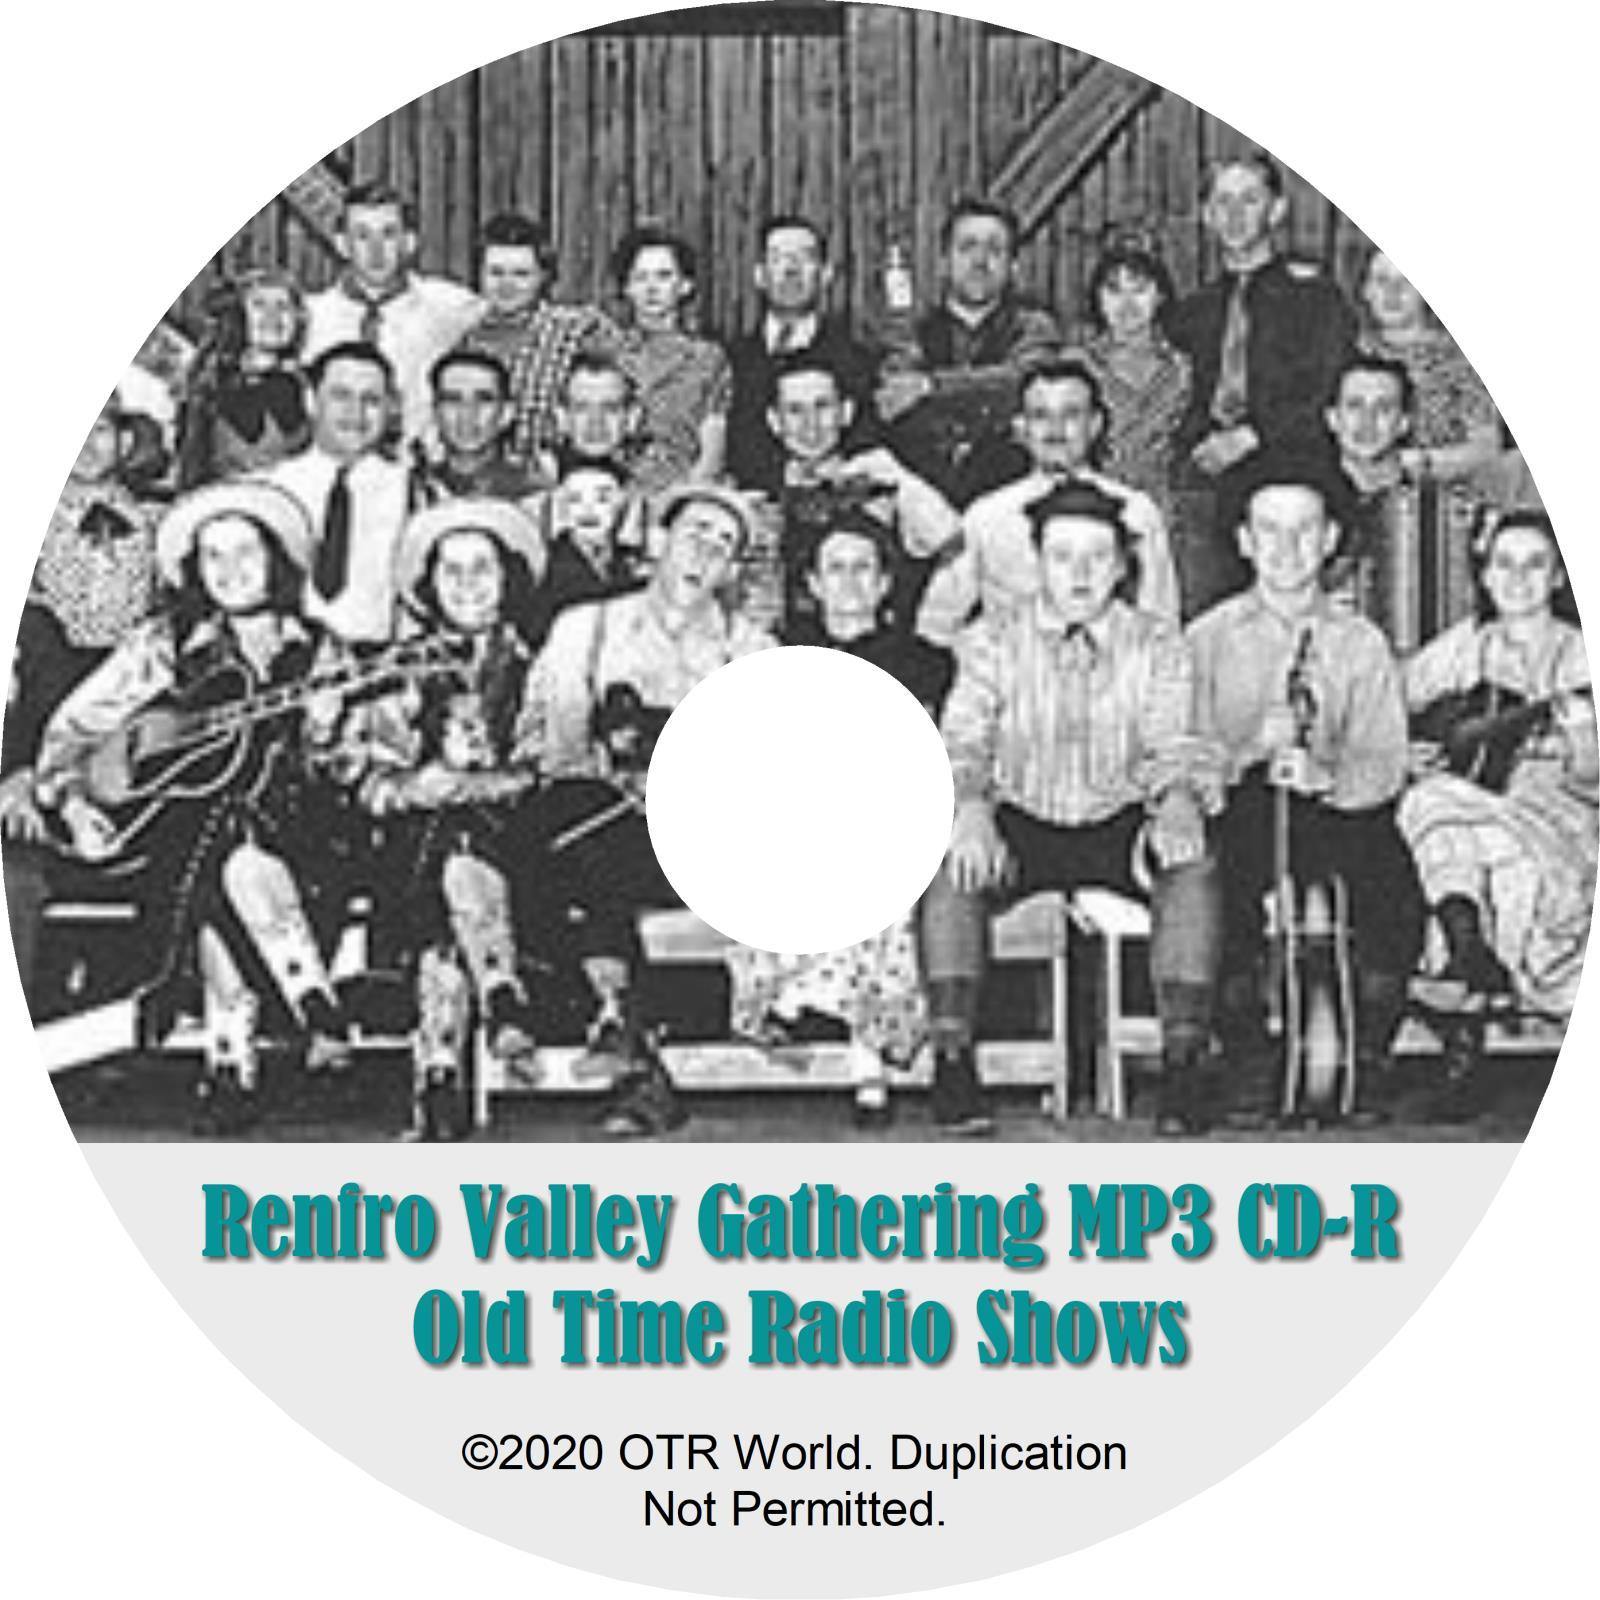 Renfro Valley Gathering OTR OTRS Old Time Radio Shows MP3 On CD-R 4 Episodes - OTR World